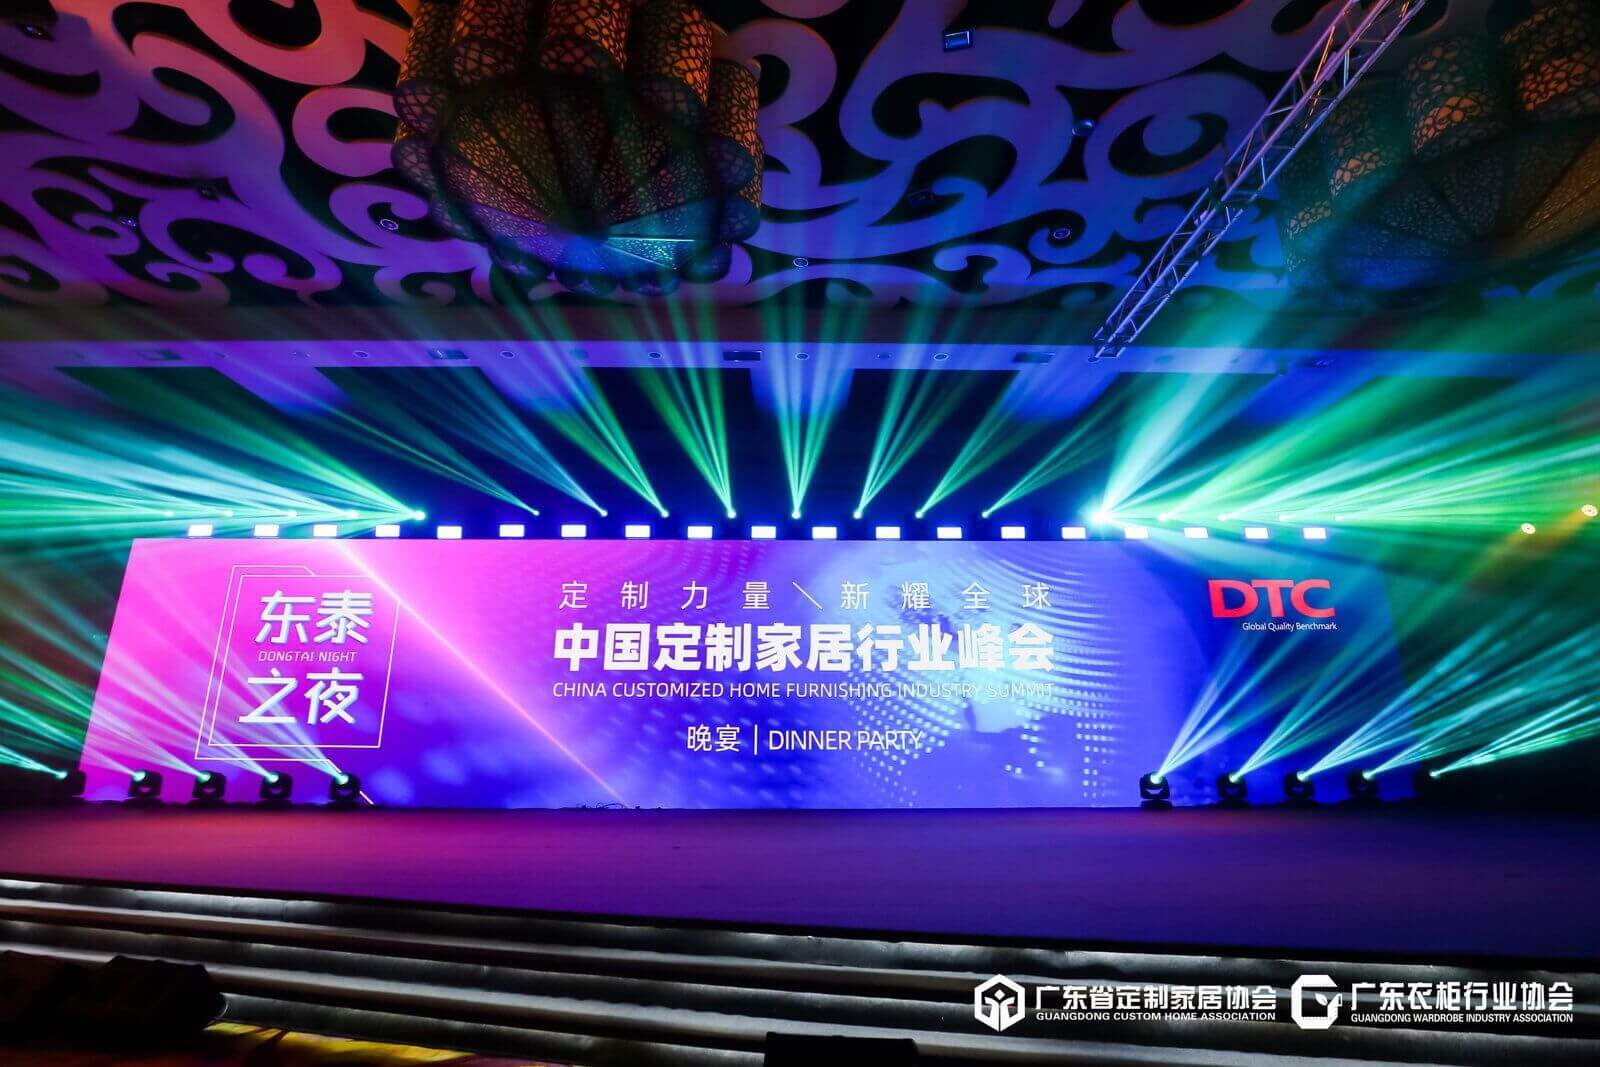 DTC Night-China Customized Home Furnishing Industry Summit